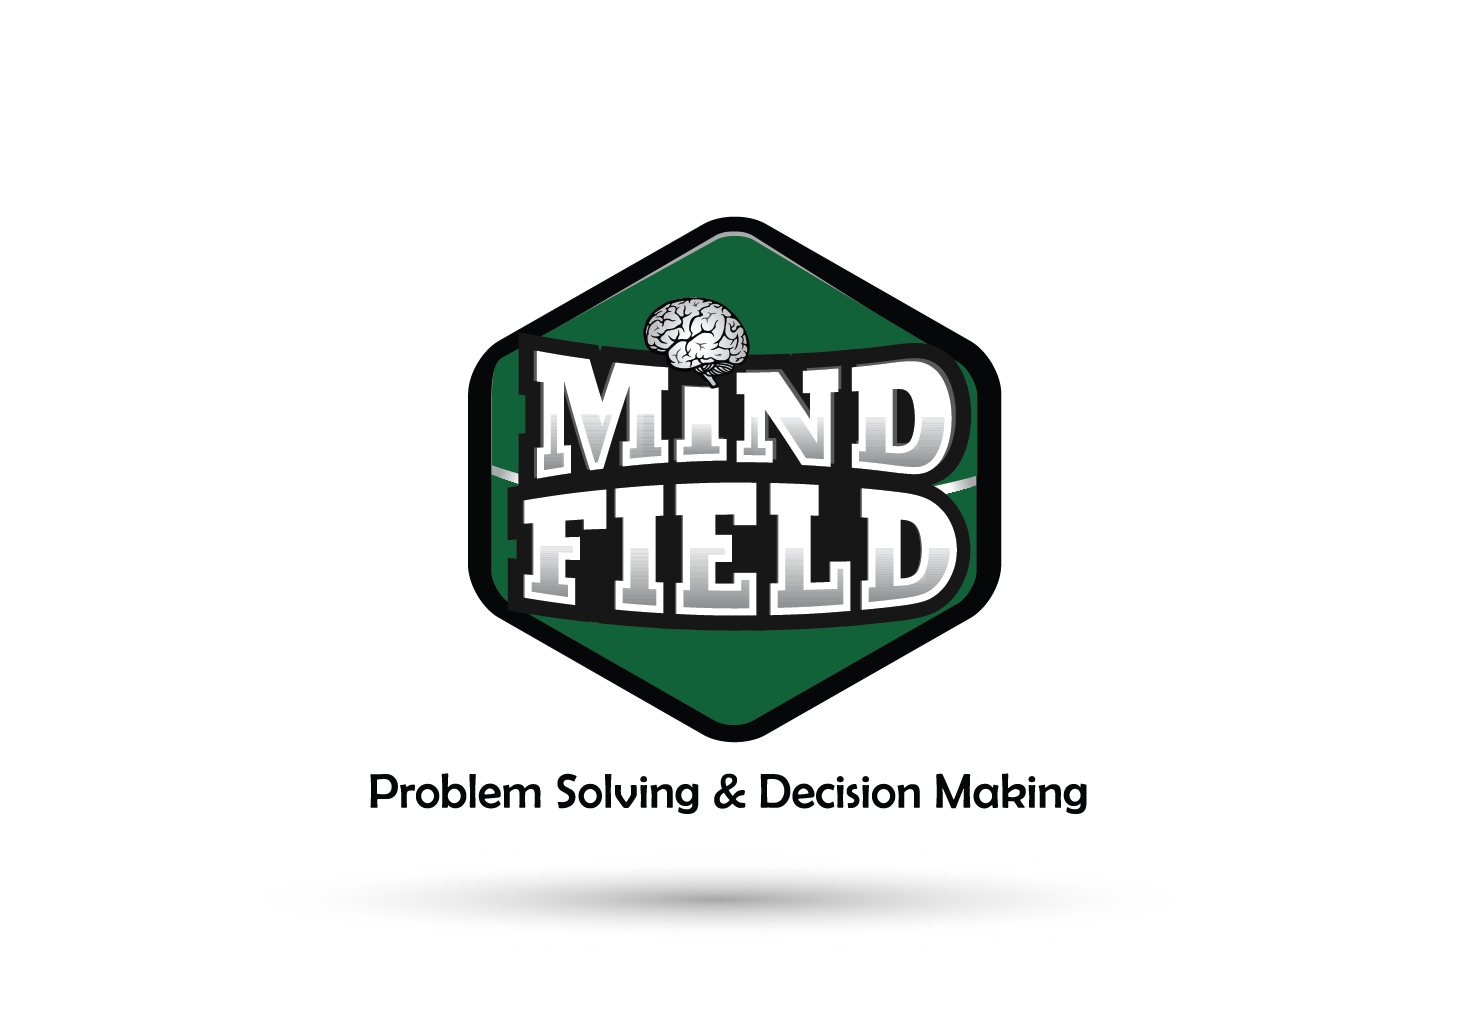 MindField (Virtual)